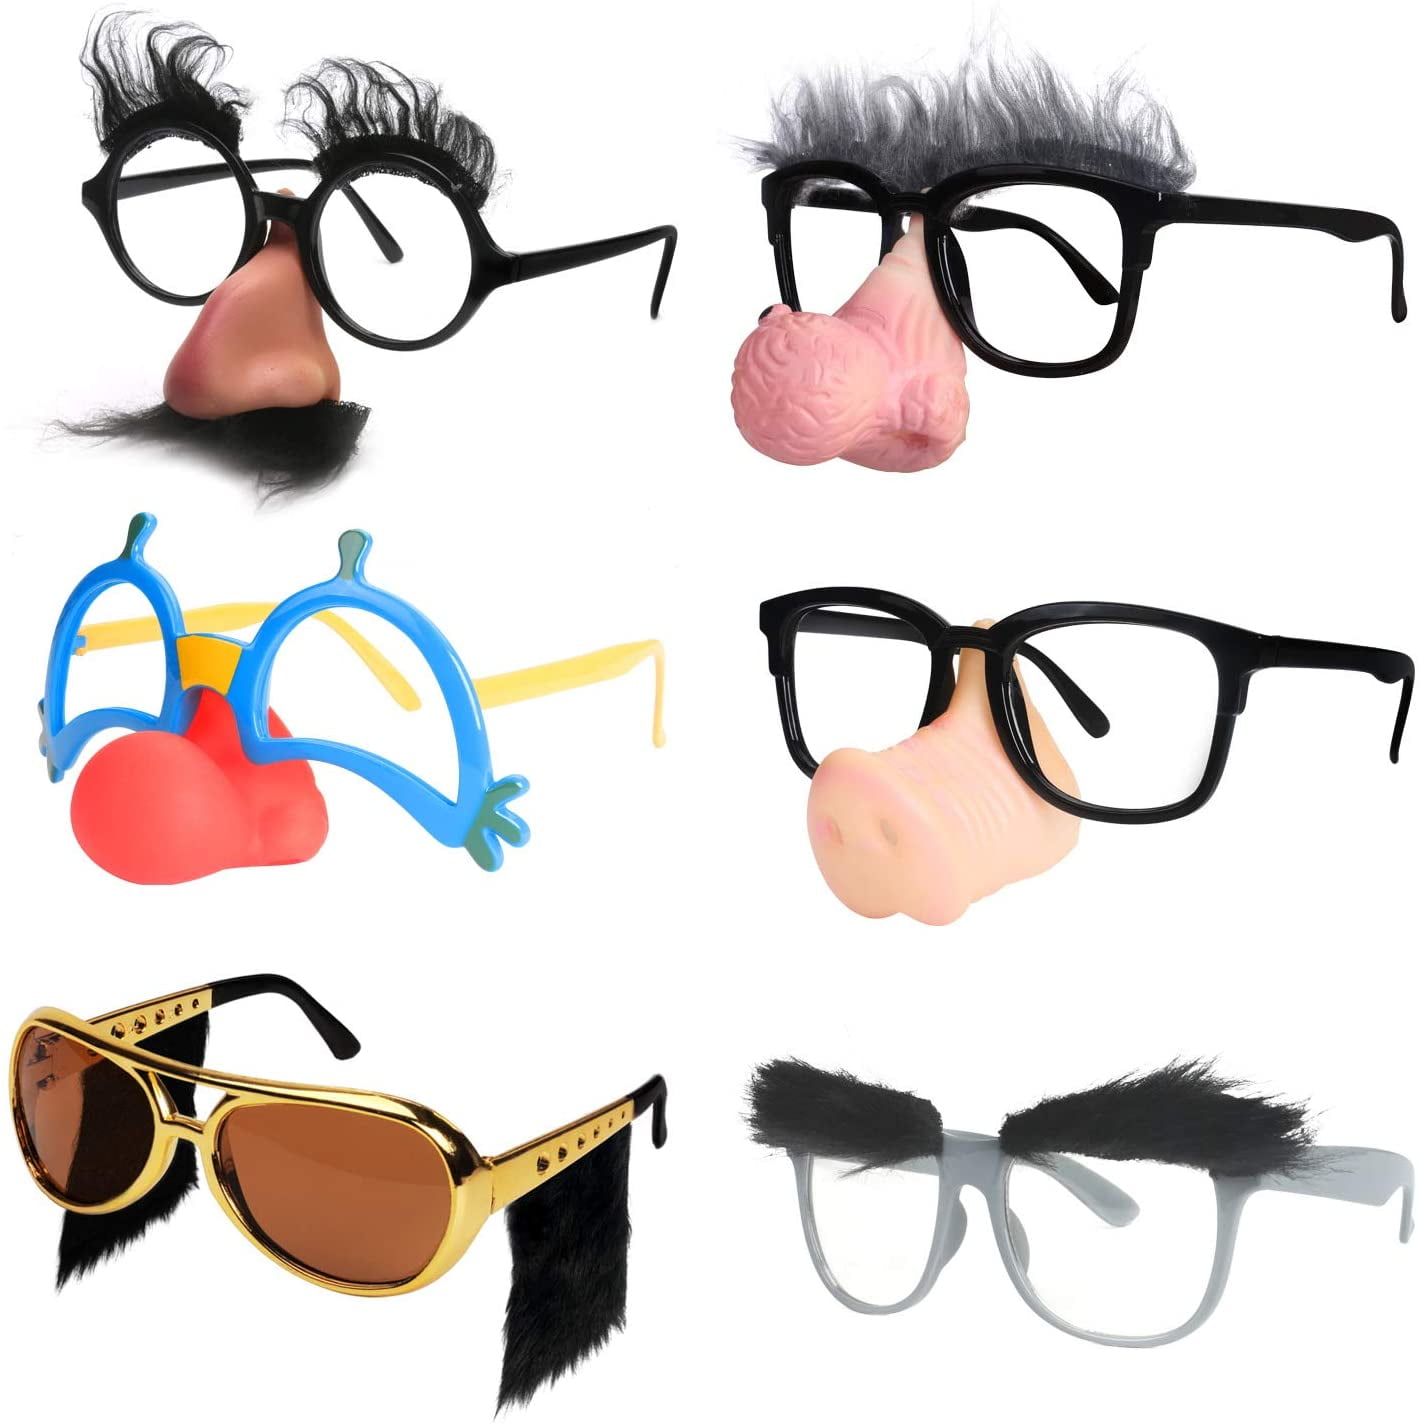 Kscd Funny Disguise Glasses Groucho Marx Mustache Glasses Kit 6 Pairs Novelty Clown Eyeglasses